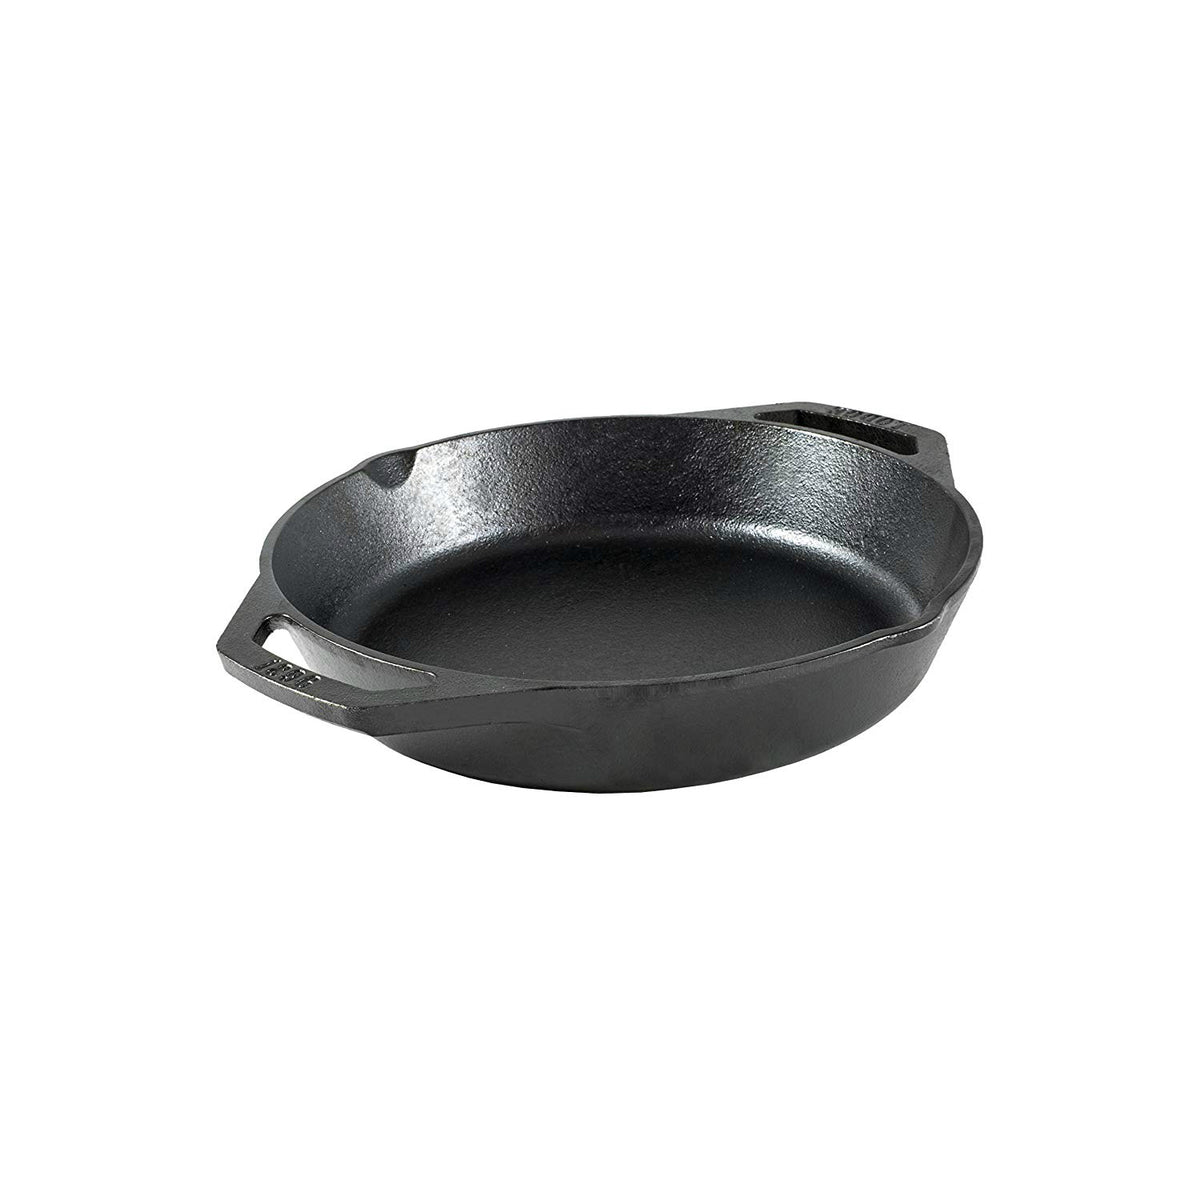 Lodge L8SKL Cast Iron Pan with Dual Handle, Black, 10.25"